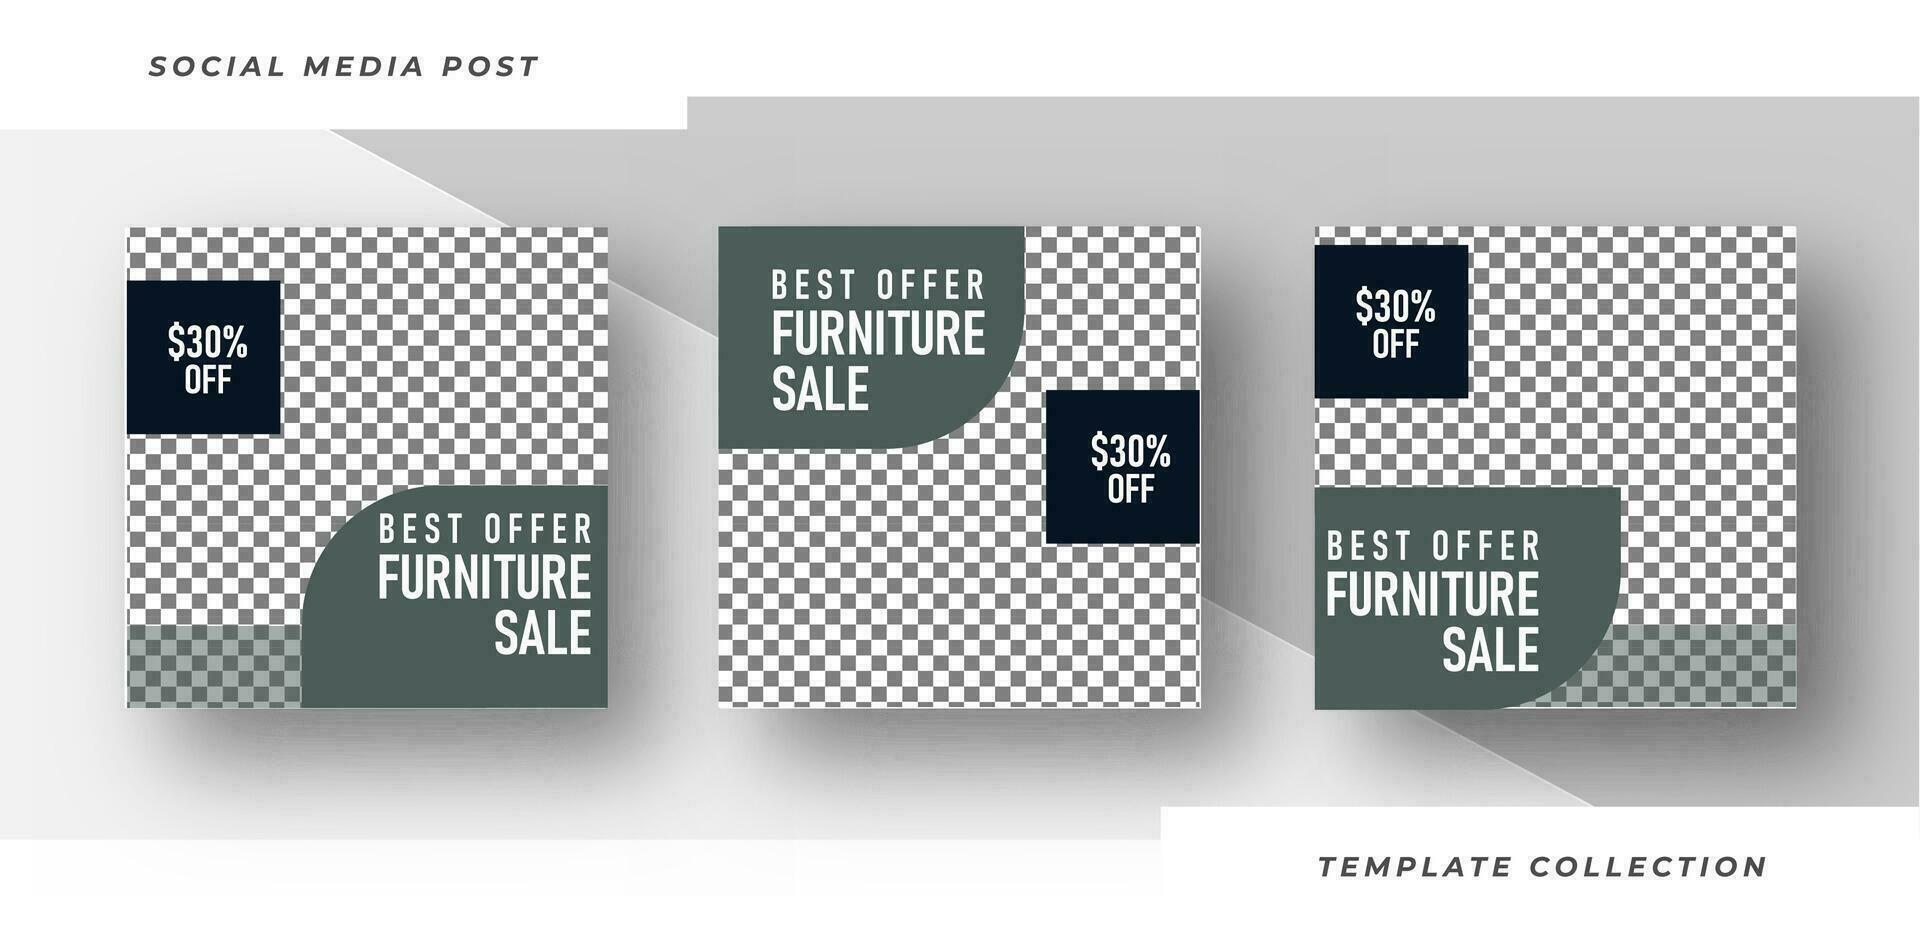 Best offer modern furniture for sale social media post template design banners, Pro Vector